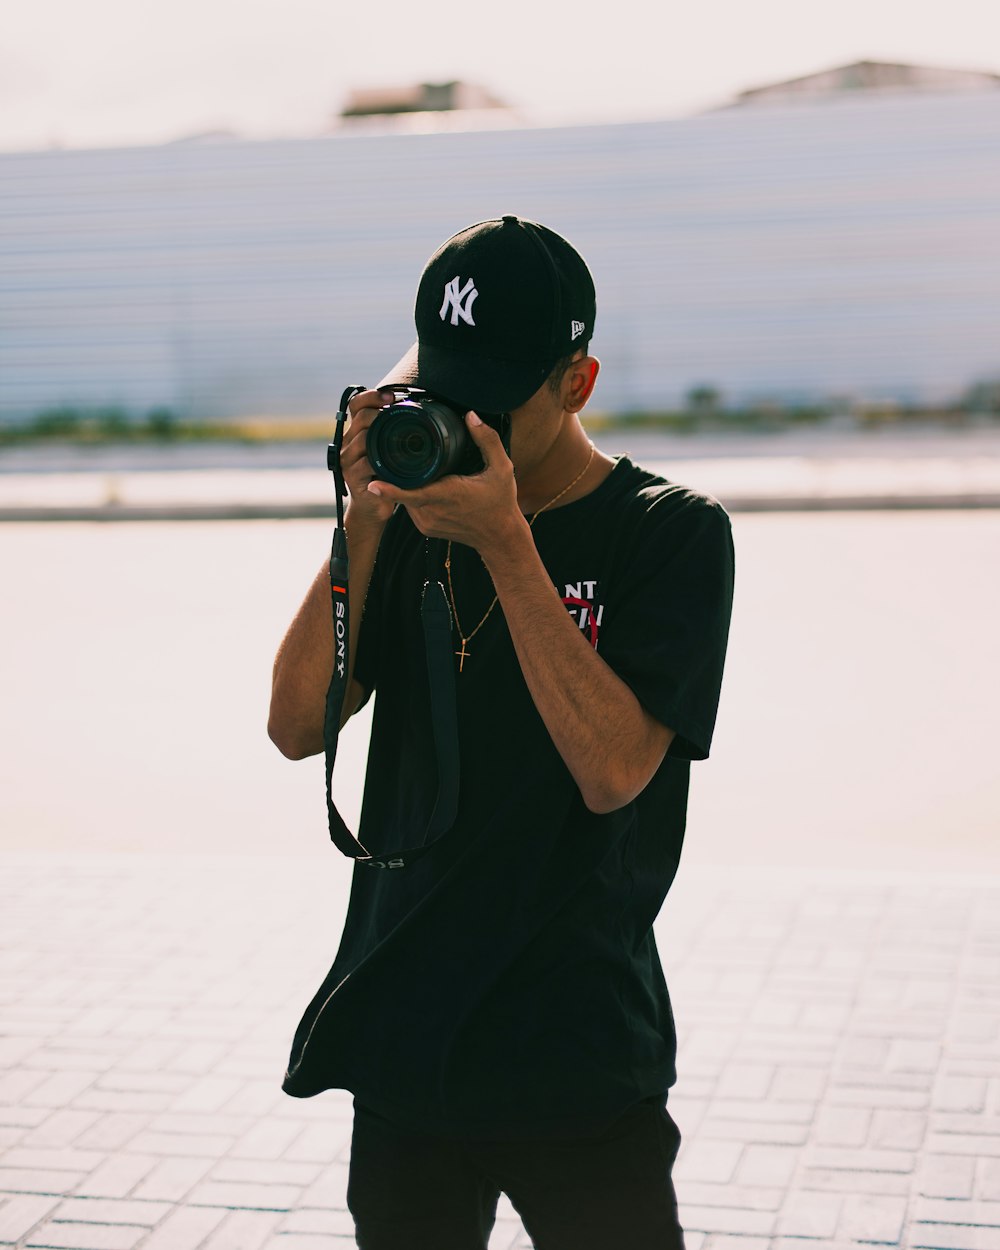 Foto Hombre en camiseta negra con cámara réflex digital negra – Imagen  Brasil gratis en Unsplash